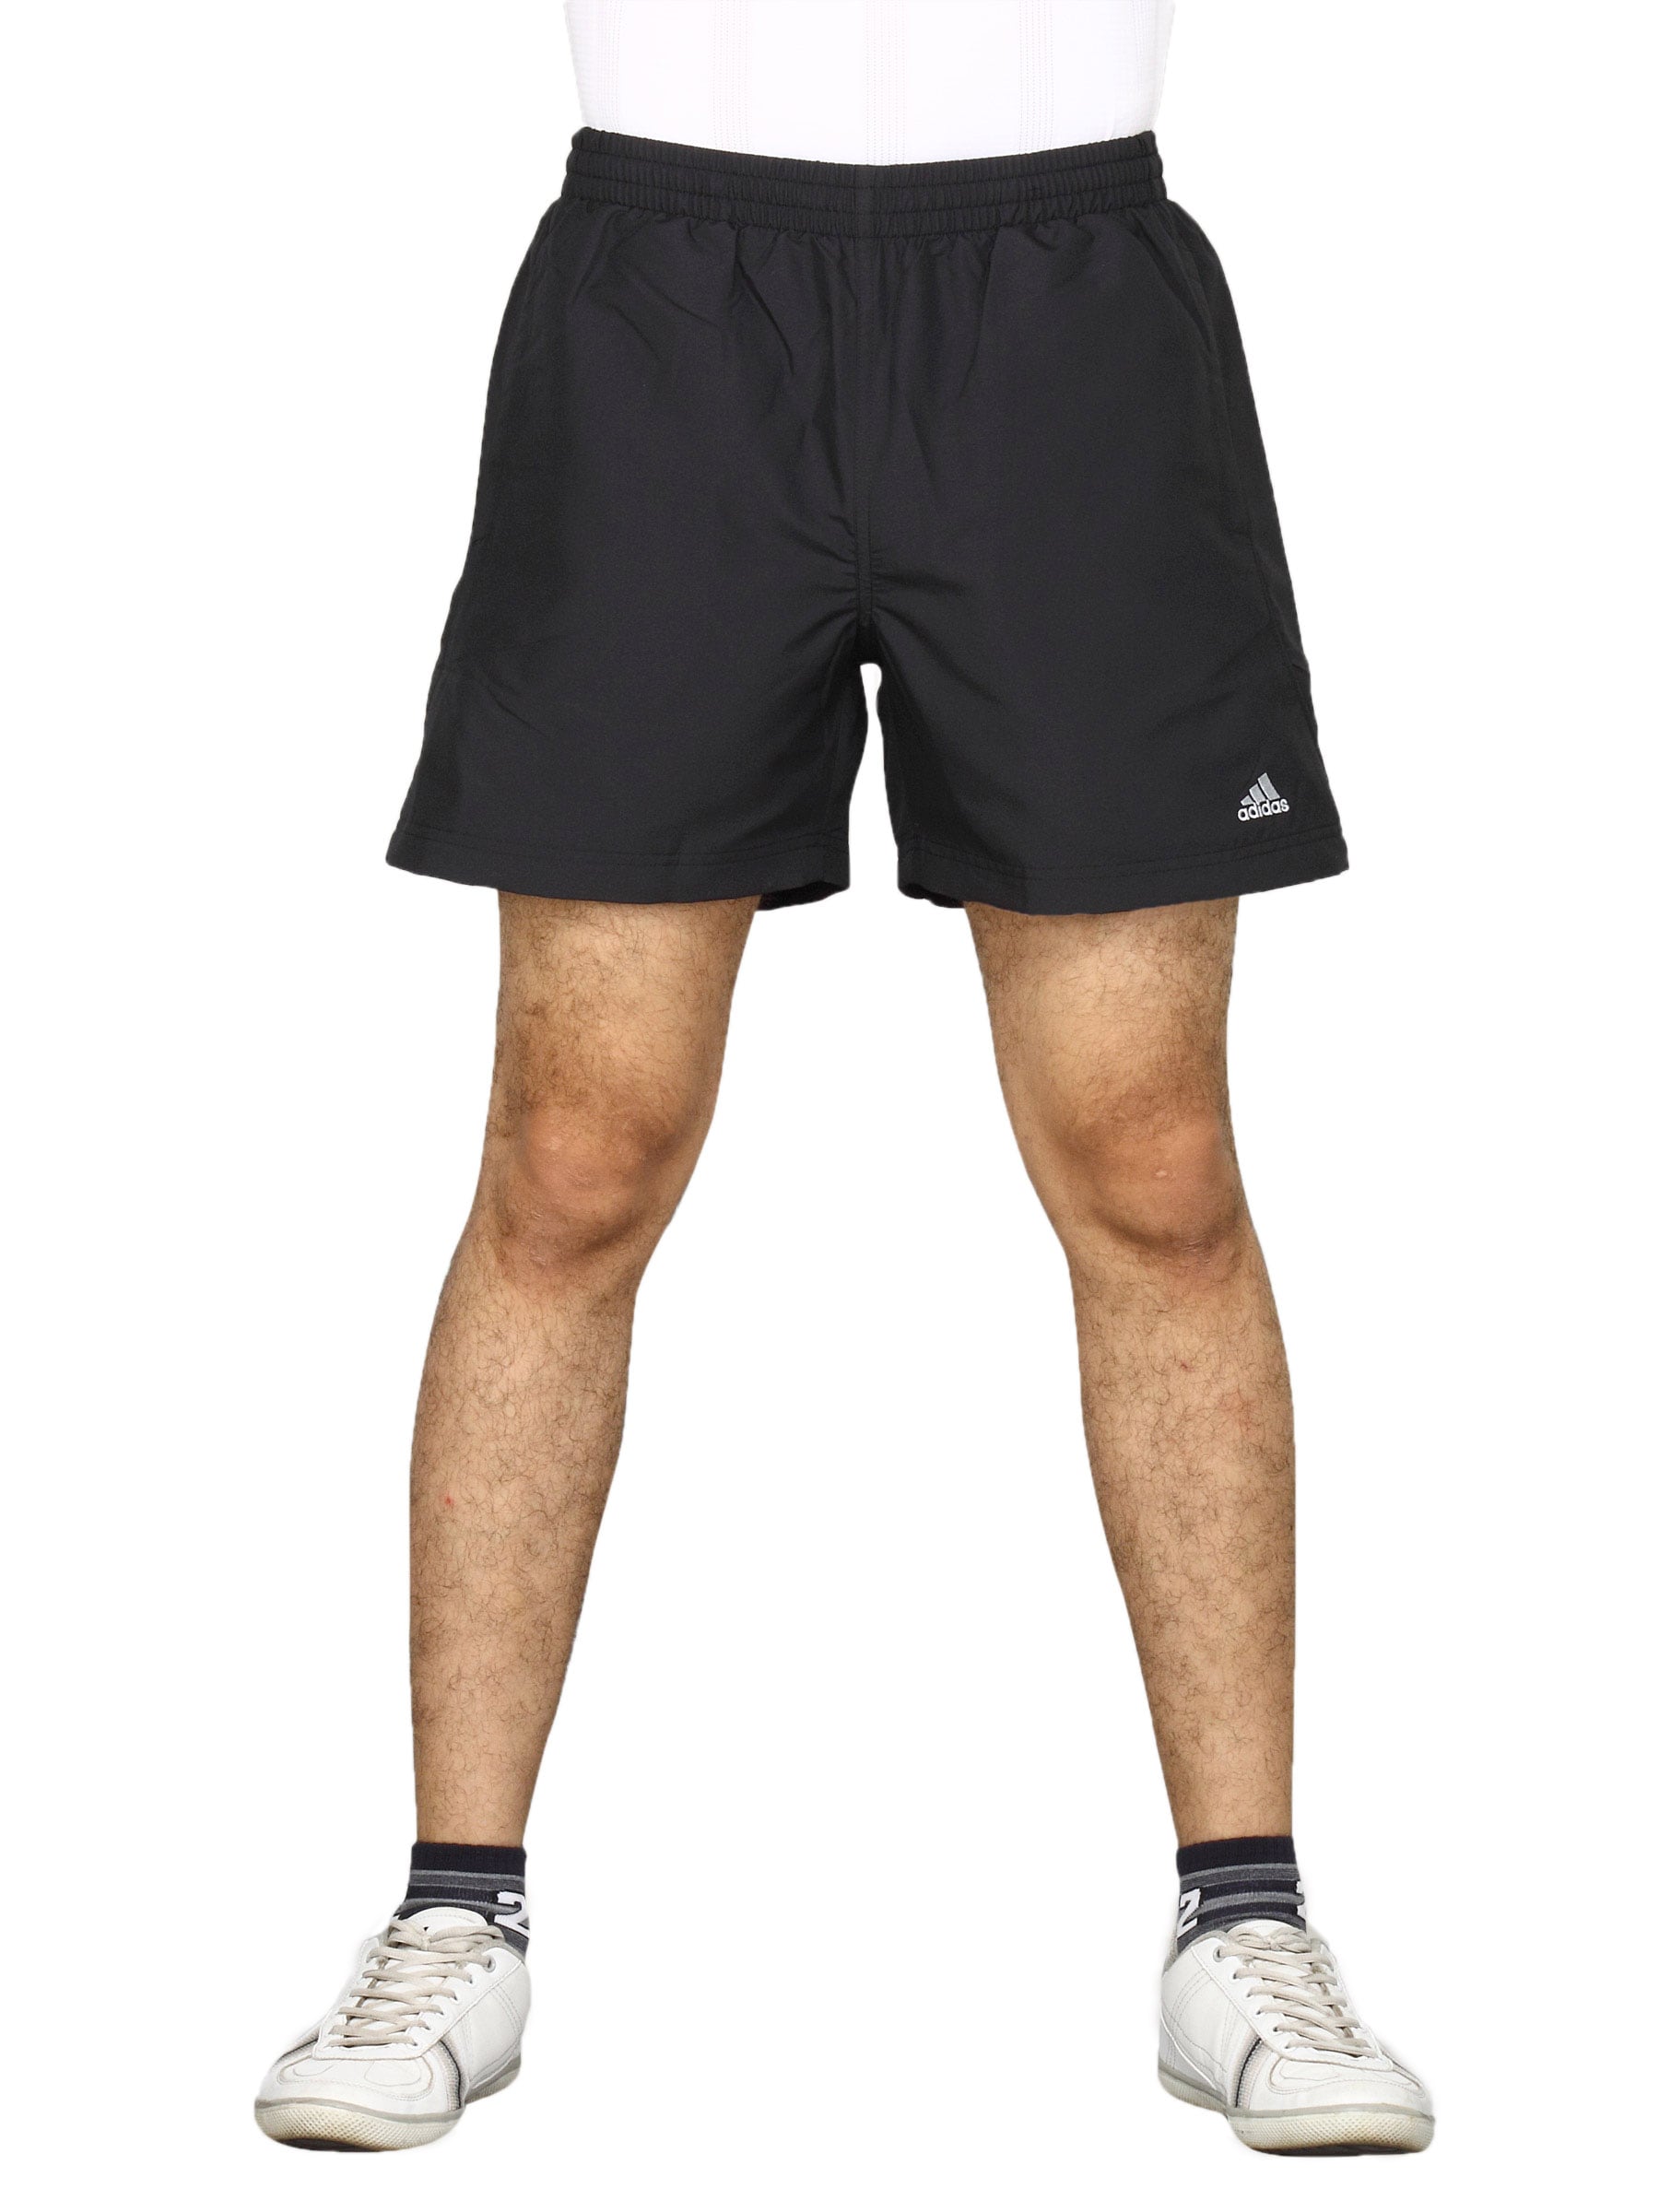 ADIDAS Men's Black Football Shorts